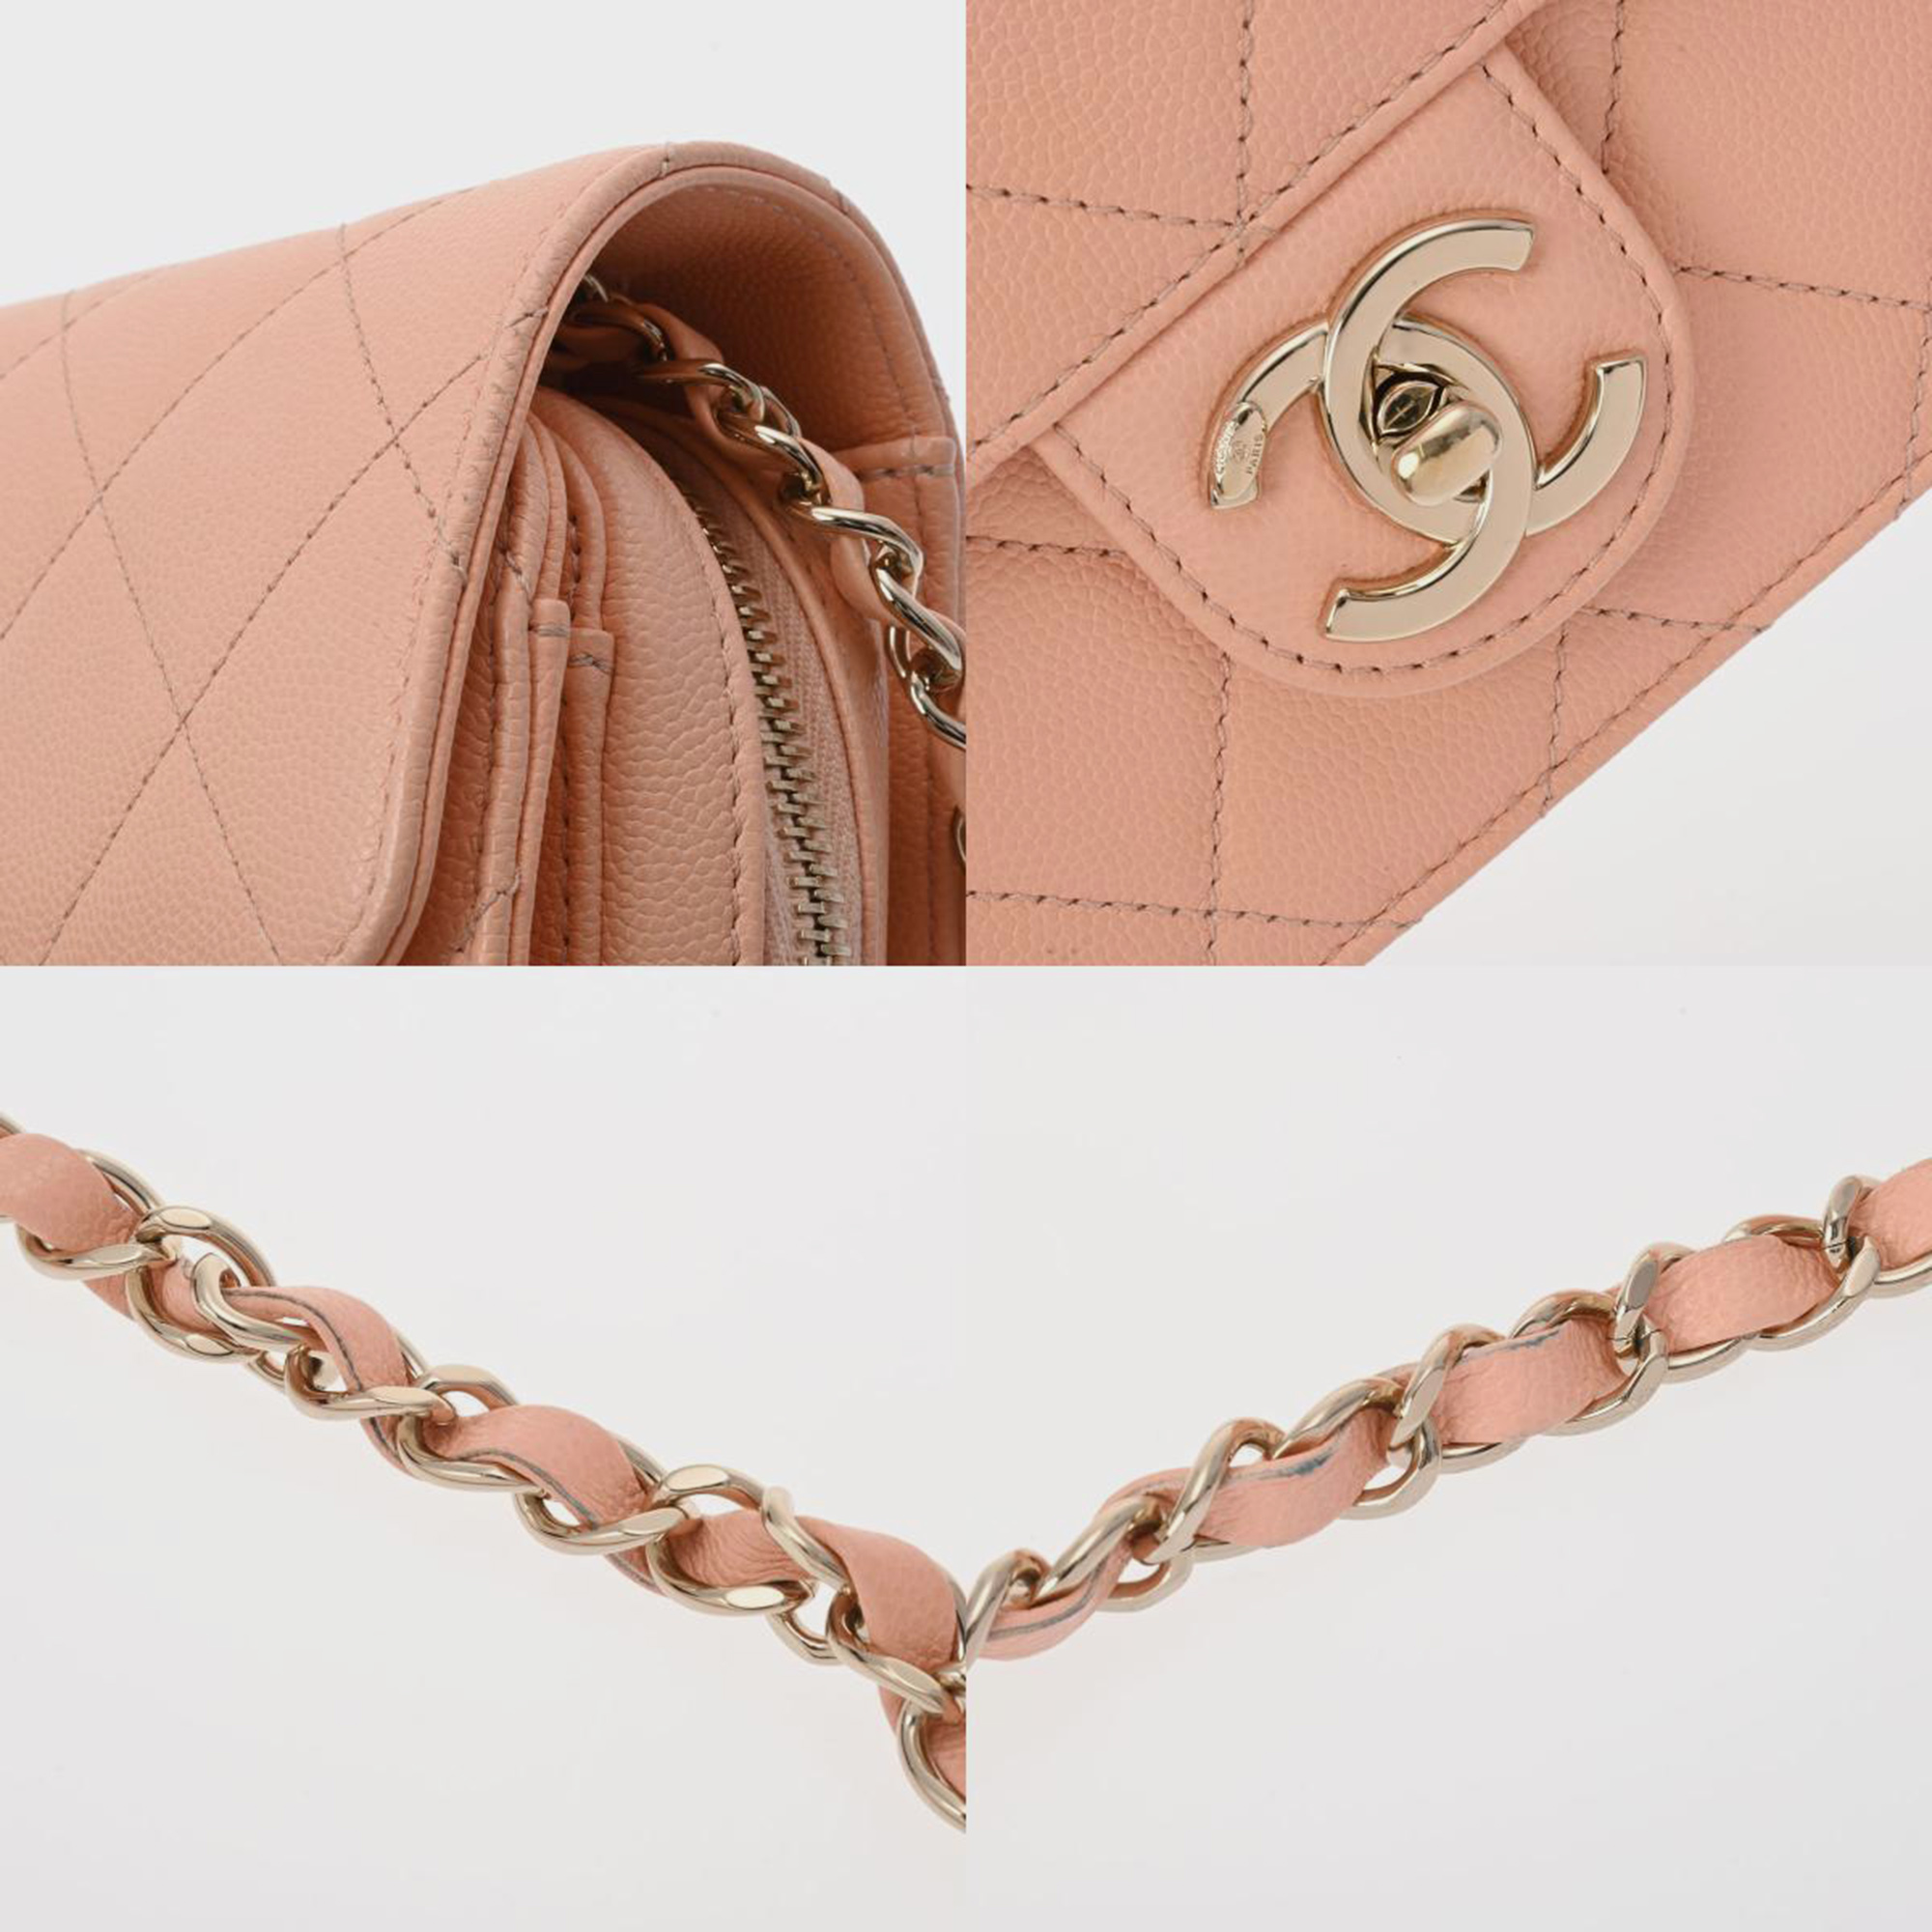 Chanel Pink Leather Mini Flap Bag